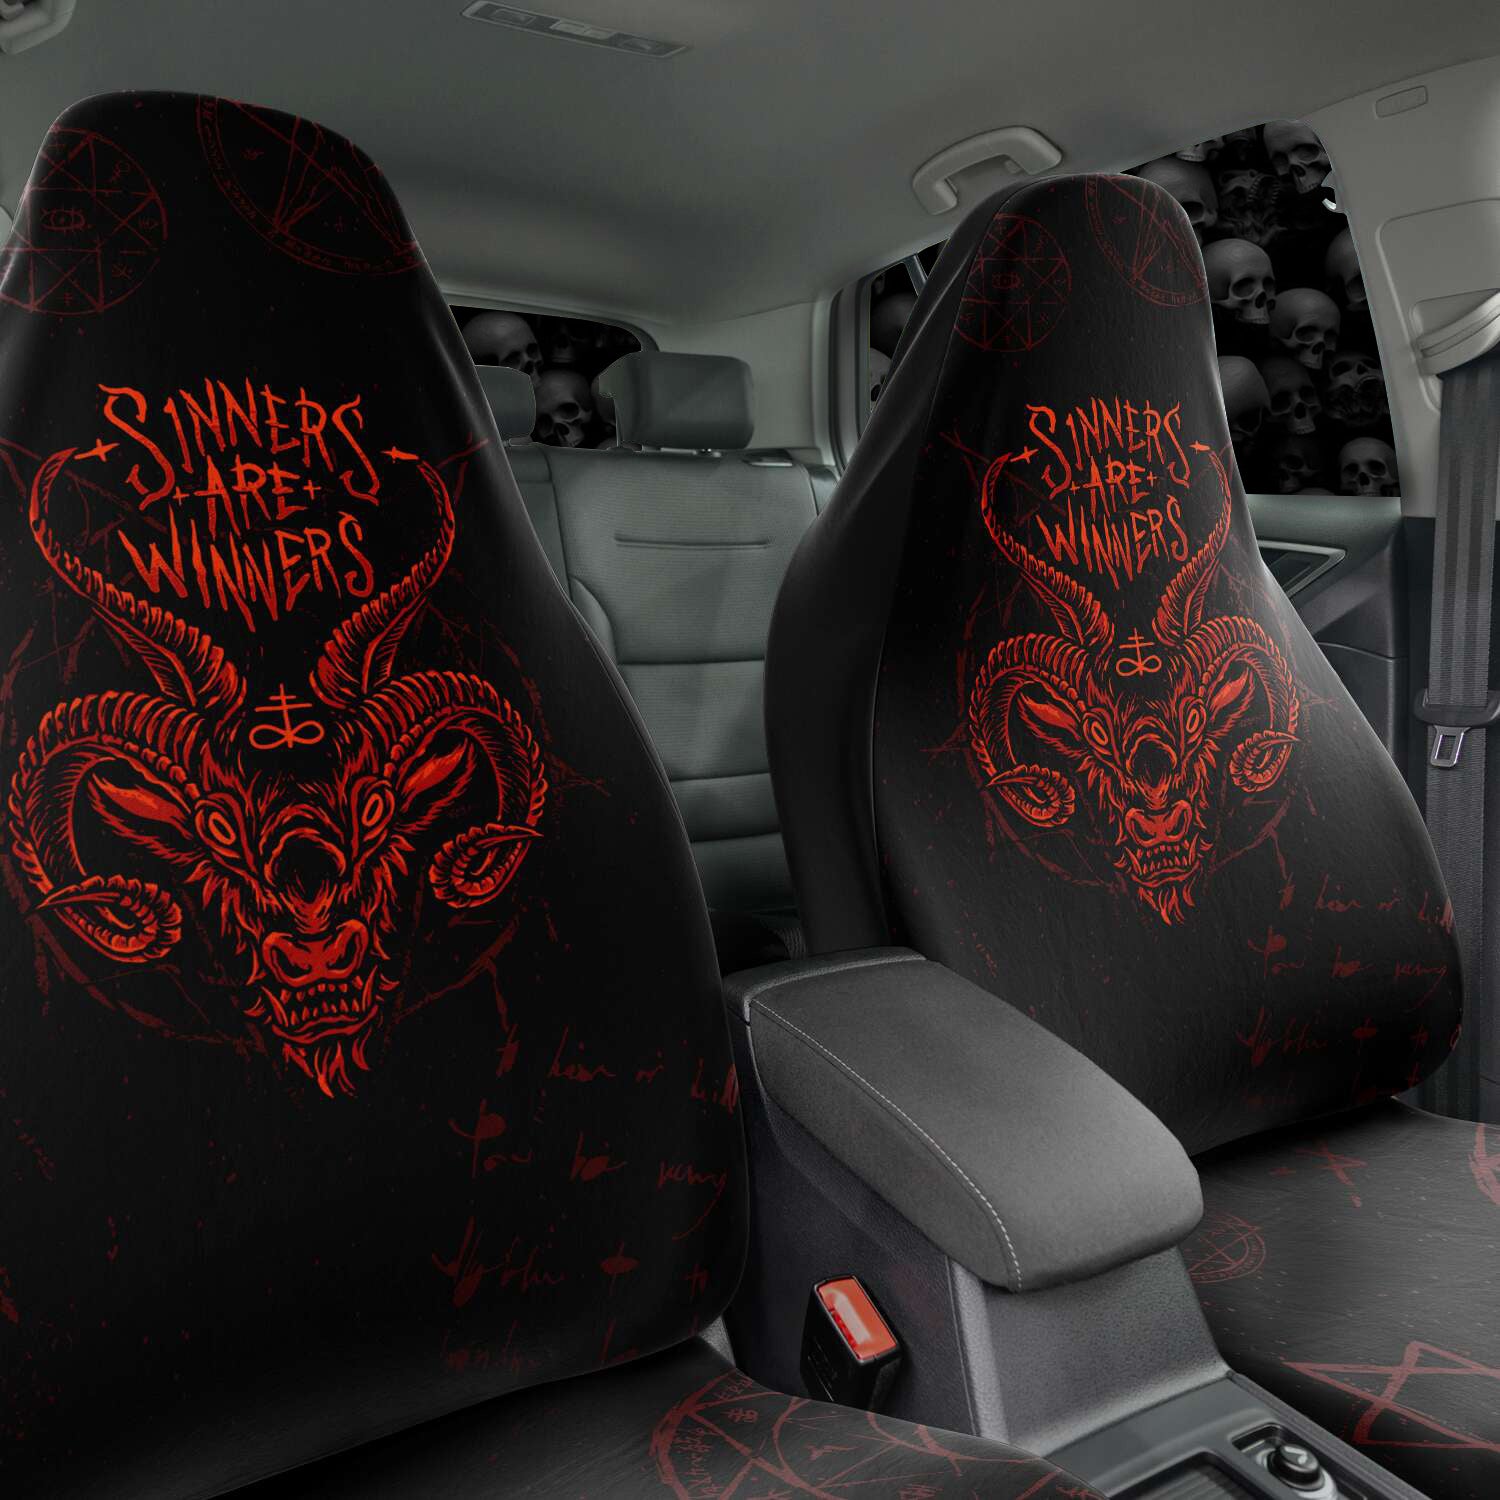 satanic goth car accessory